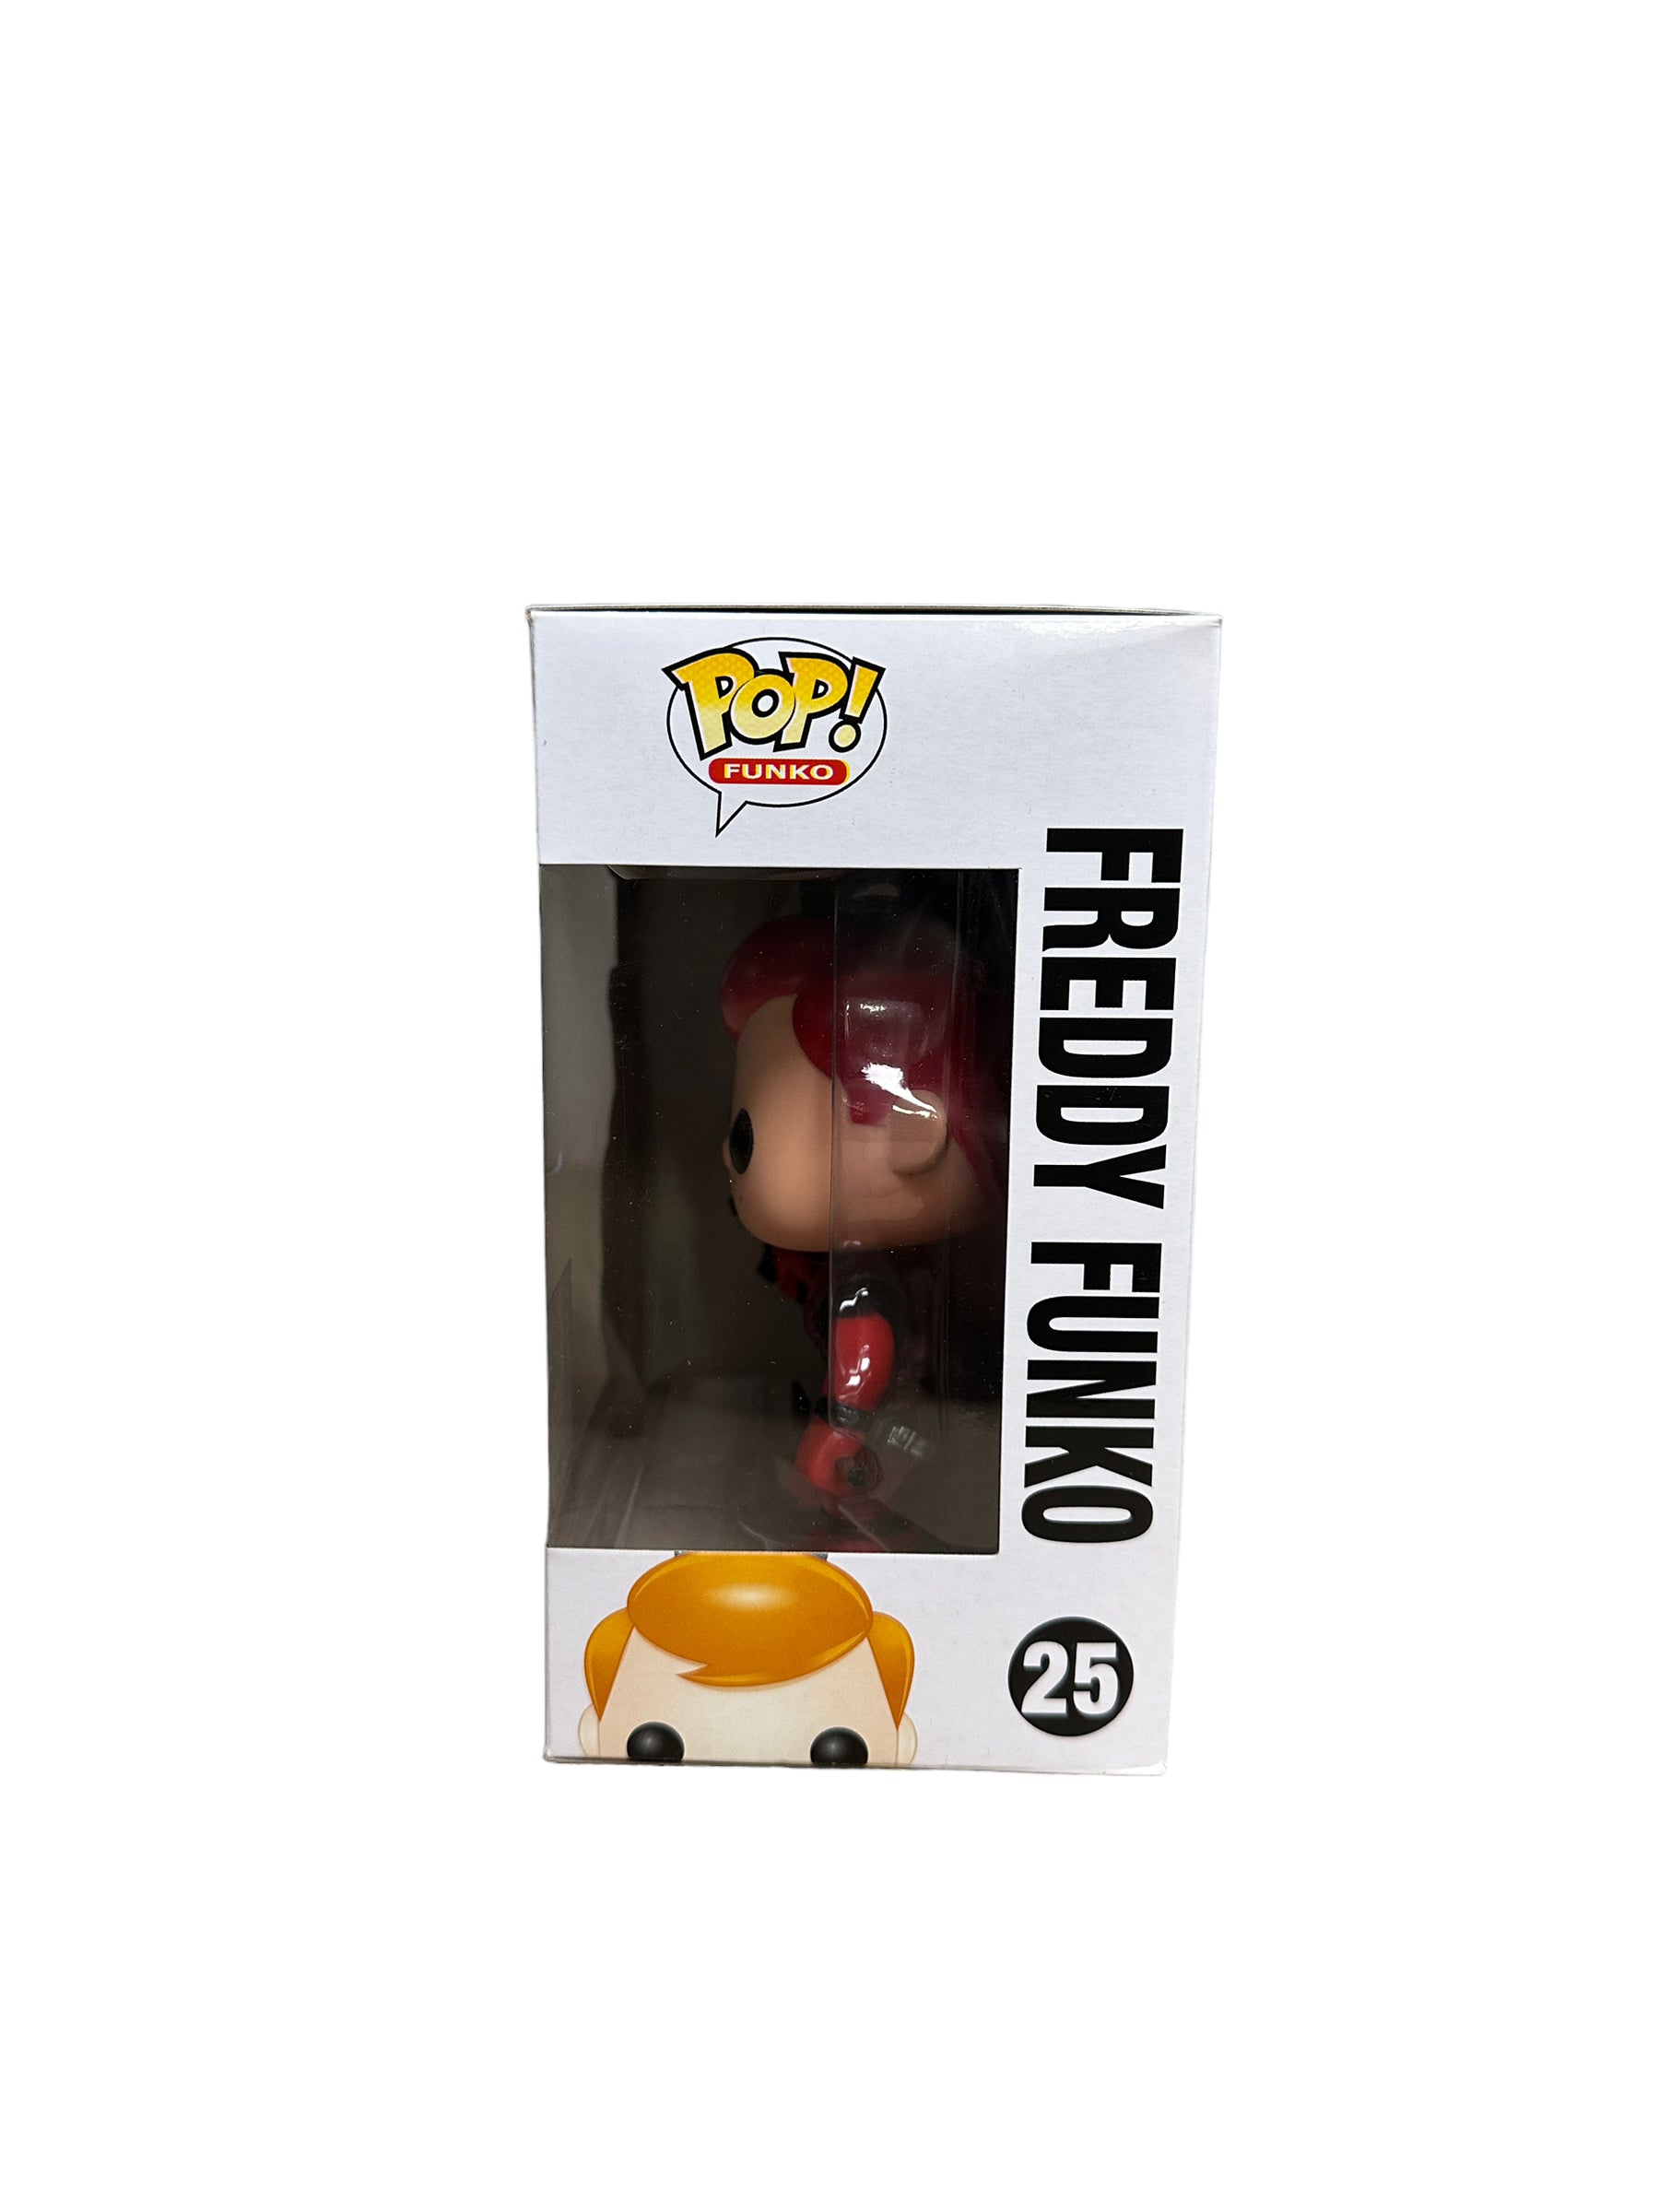 Freddy Funko as Deadpool #25 Funko Pop! - SDCC 2014 Exclusive LE300 Pcs - Condition 8.5/10